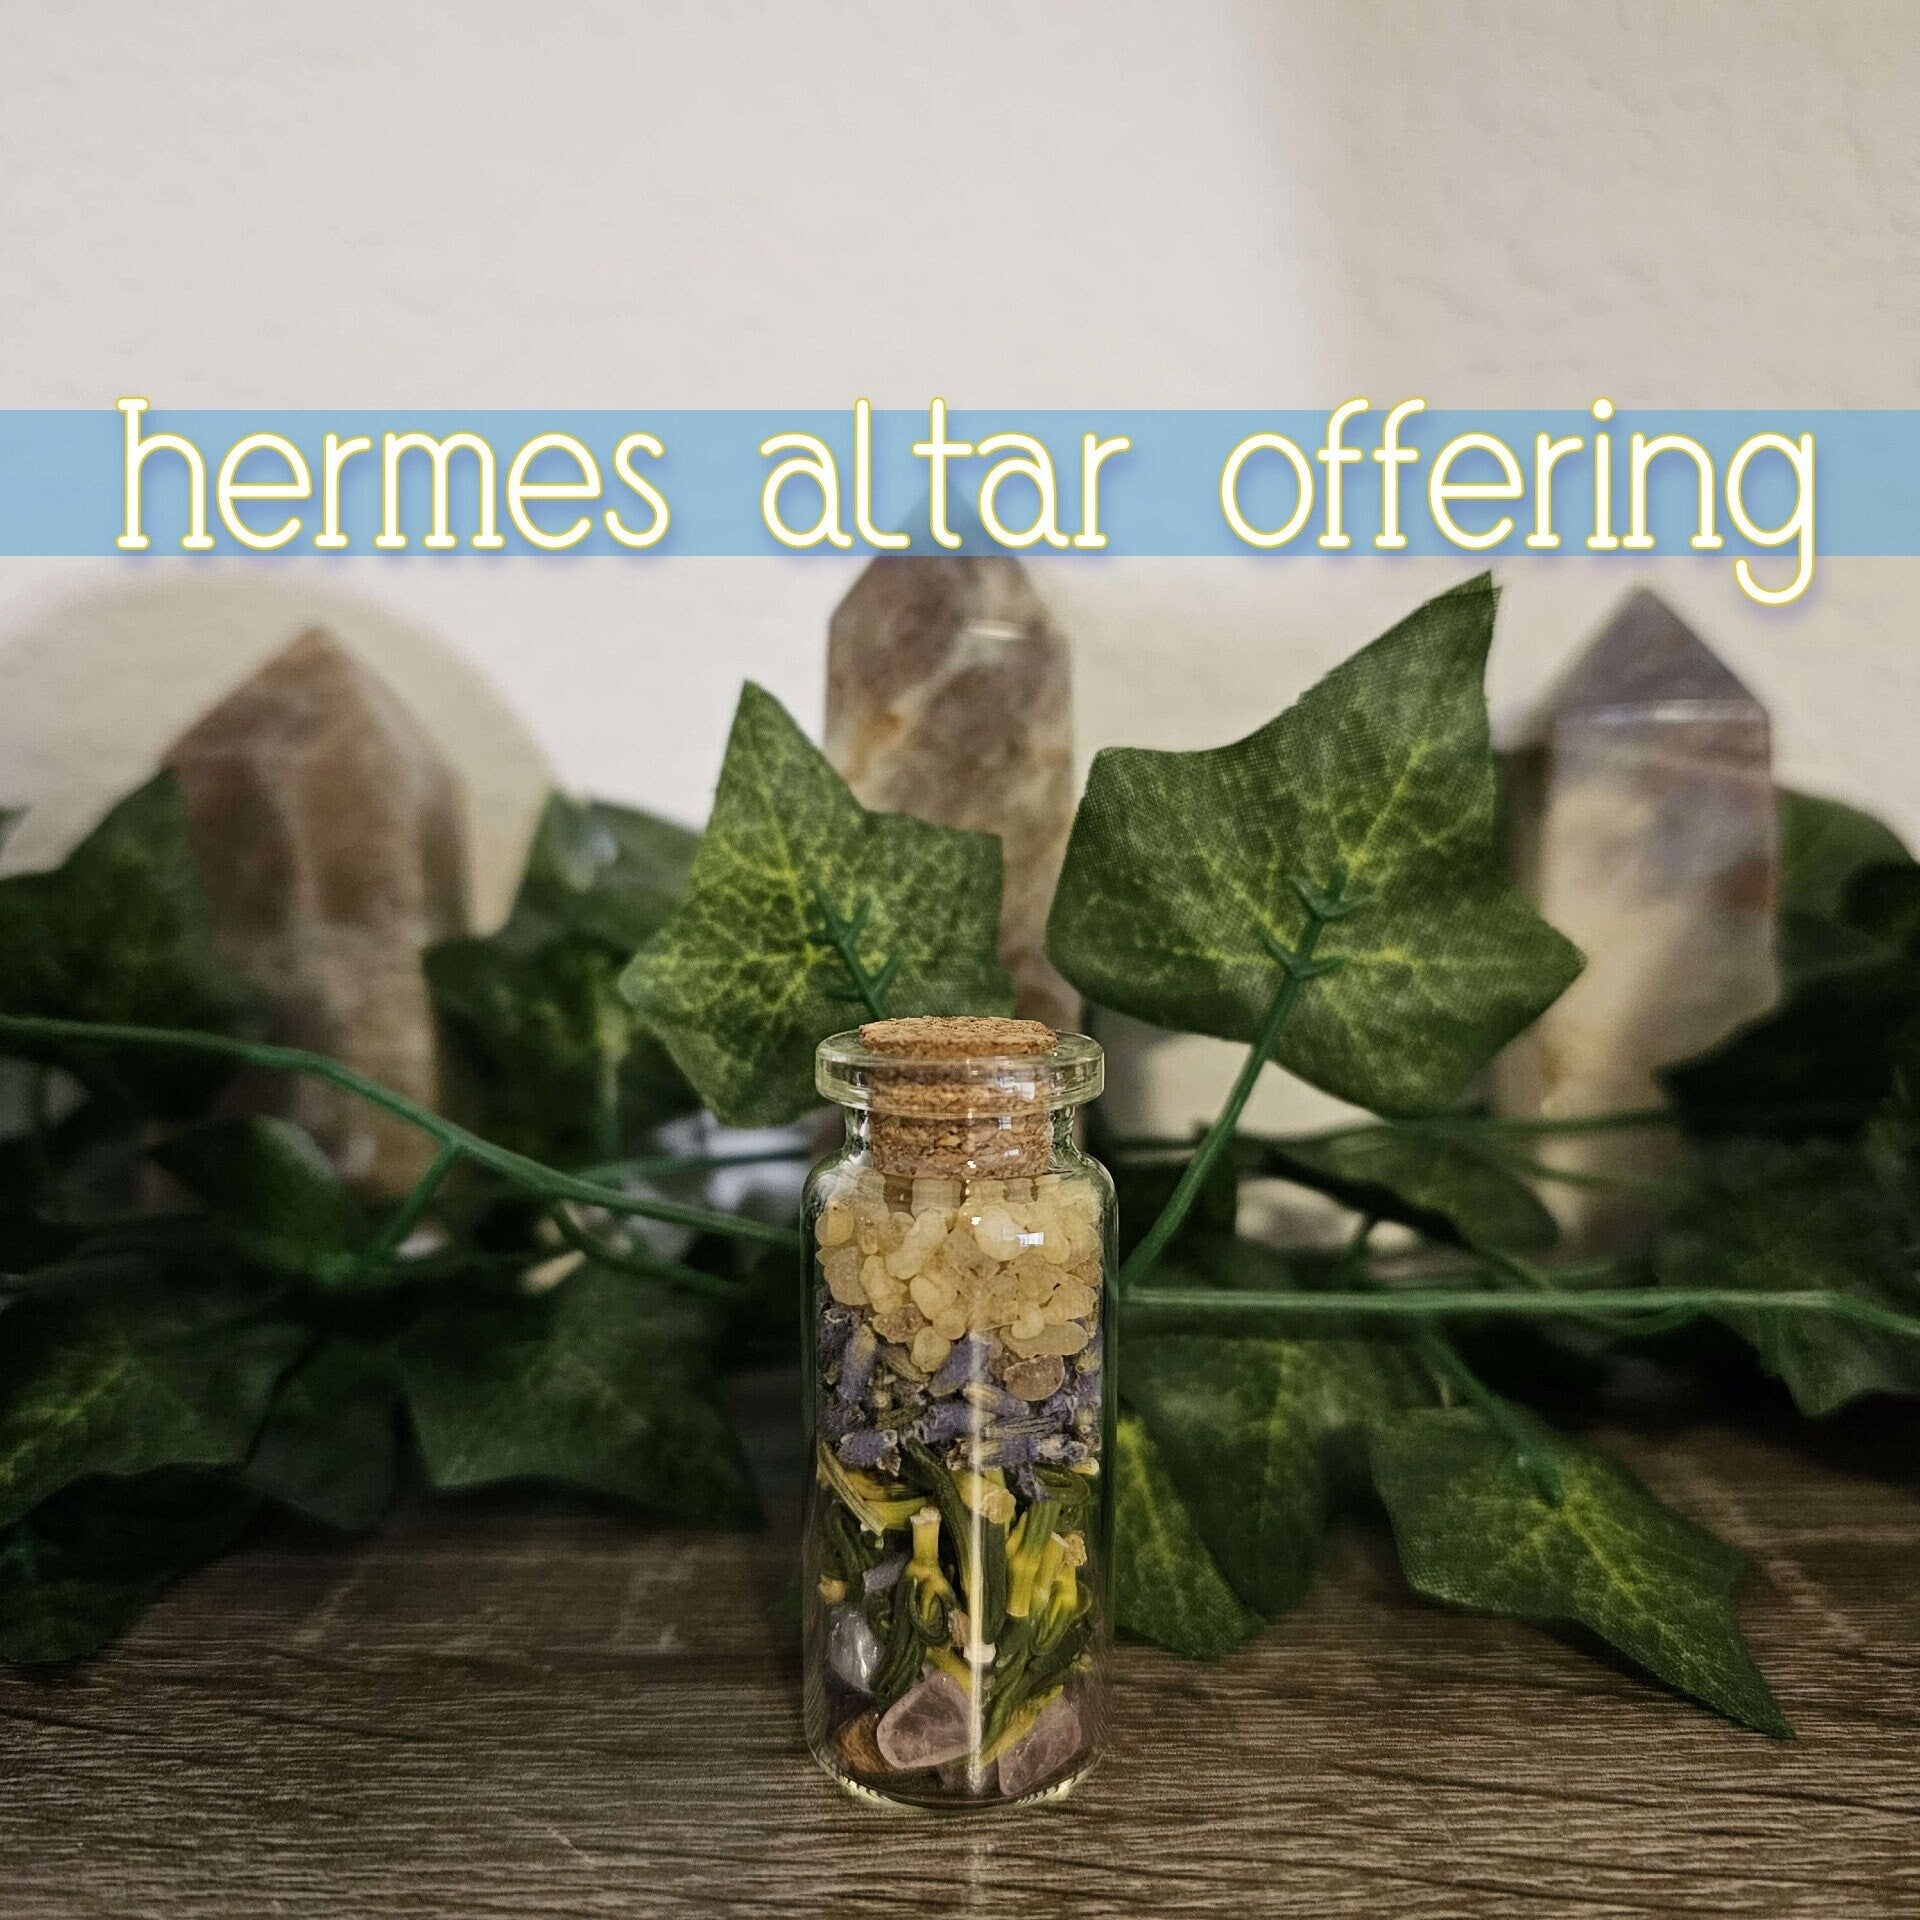 HERMES Altar Offering - offering for the Gods - Messenger of the Gods - God of Herds, Trade, Travel - Greek - Mercury - Shrine & Altar Tools